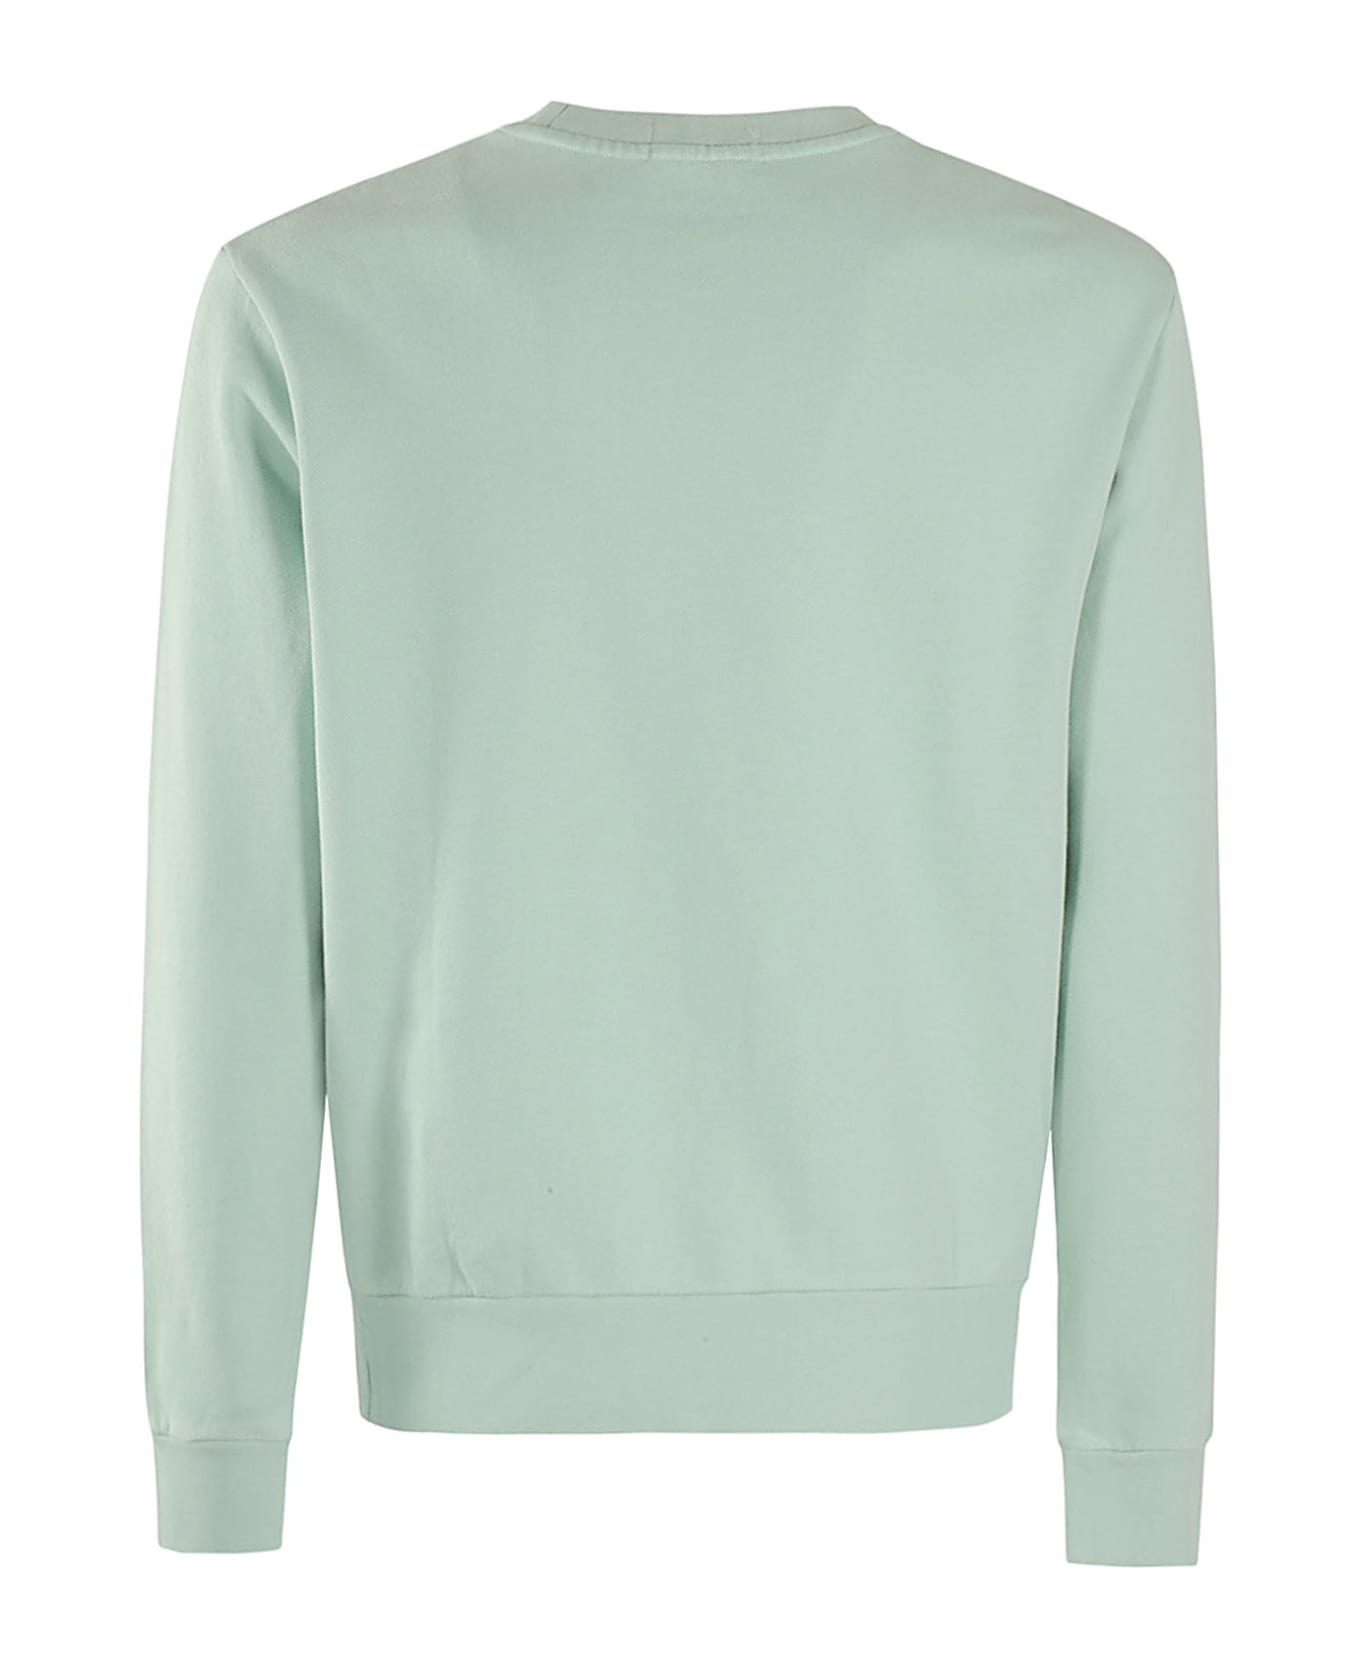 Polo Ralph Lauren Long Sleeve Sweatshirt - Celadon